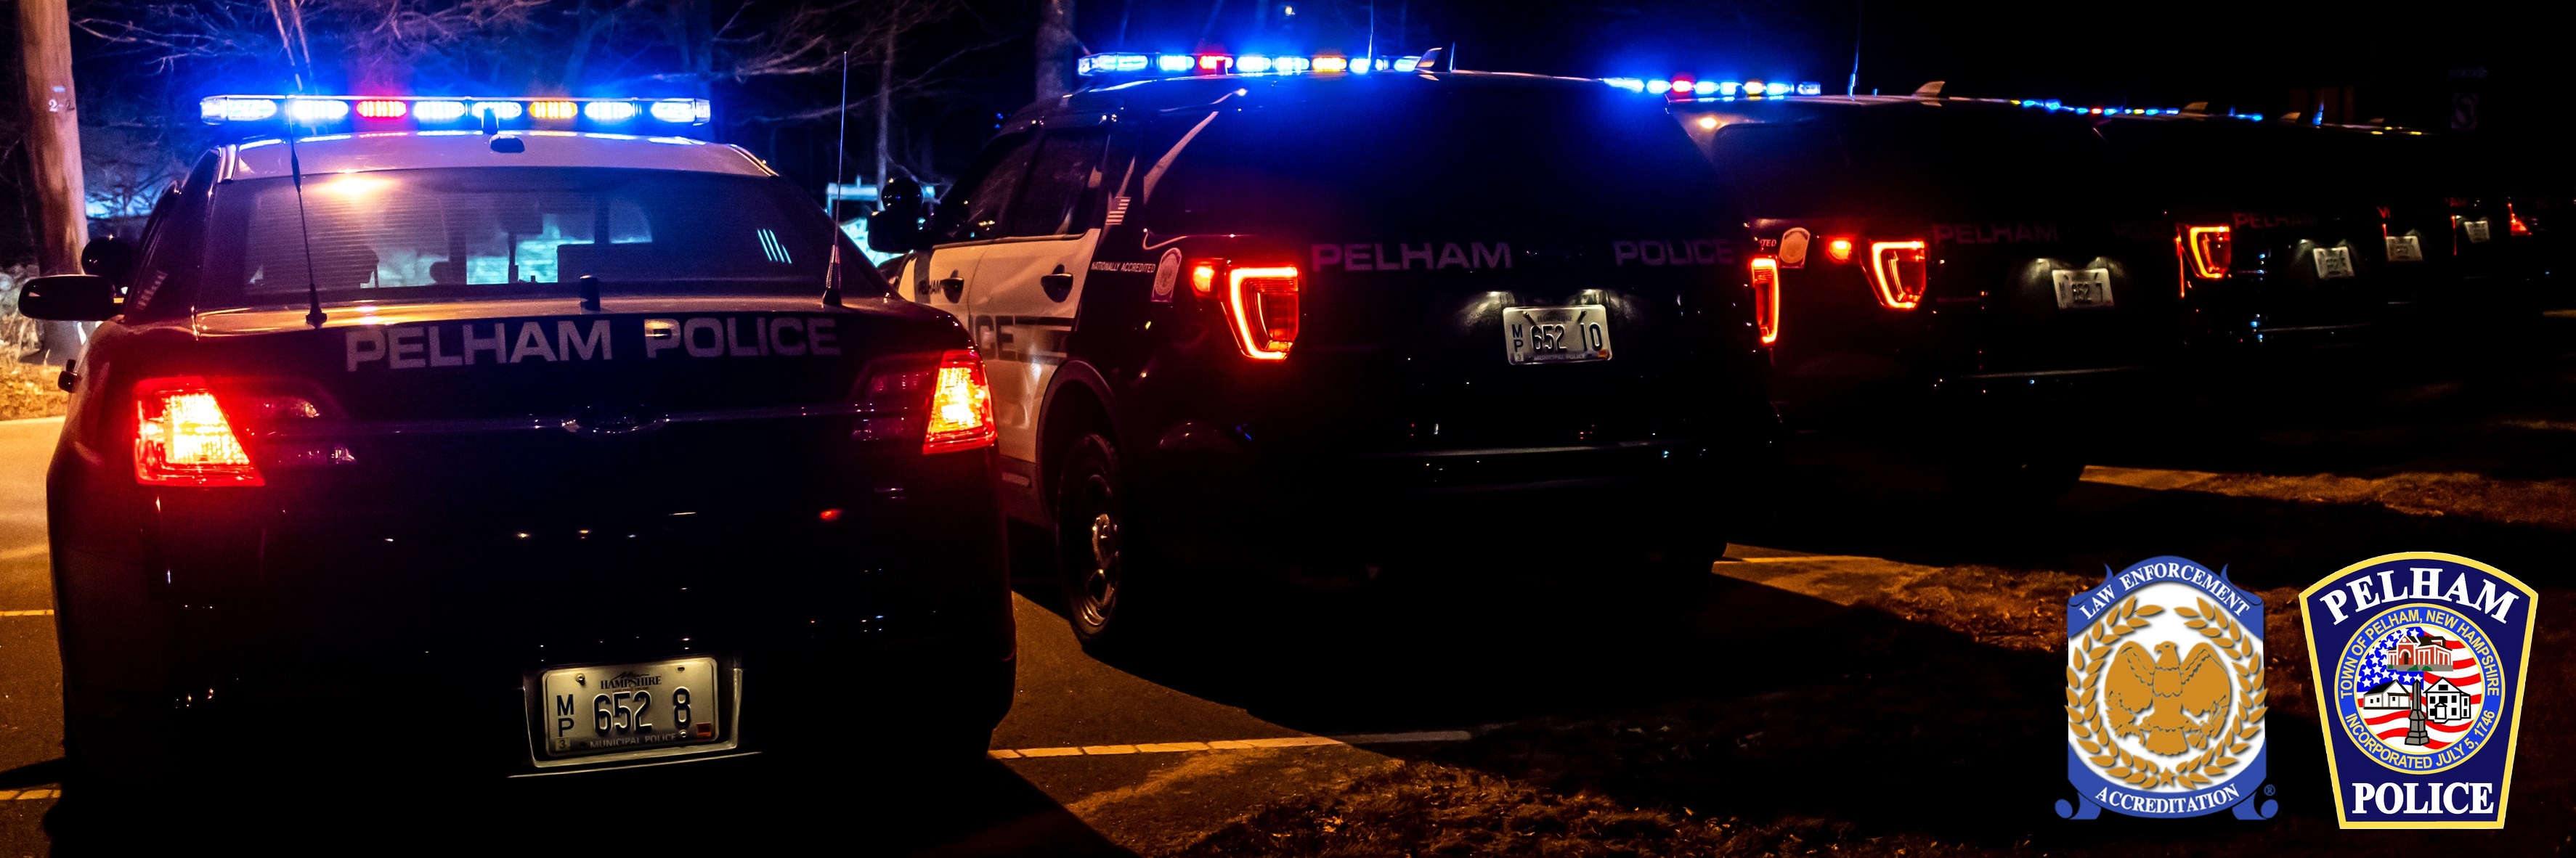 Pelham Police Department, NH Public Safety Jobs